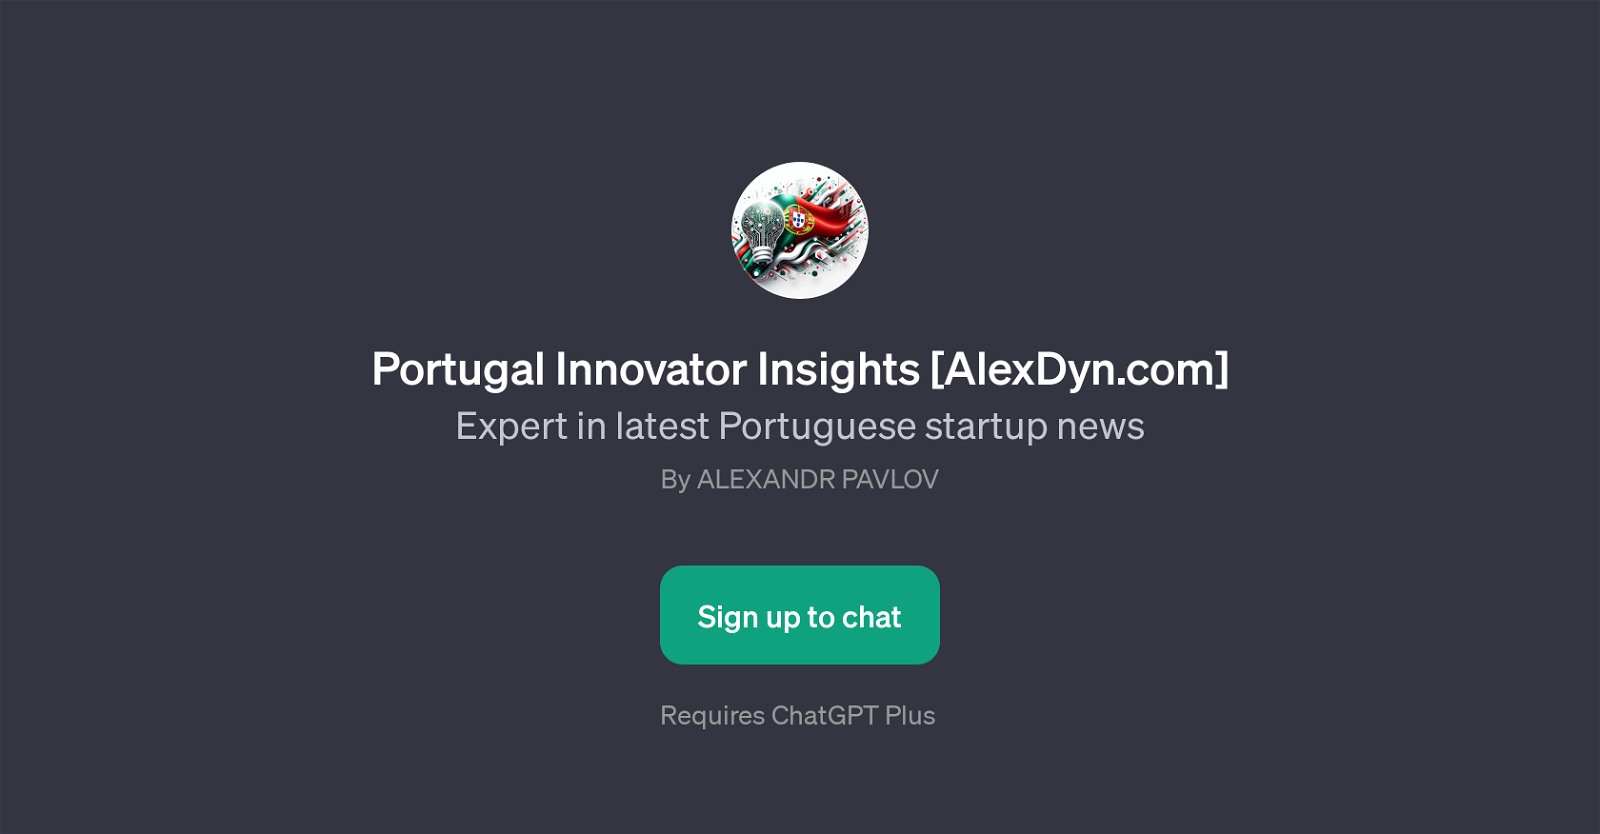 Portugal Innovator Insights [AlexDyn.com] website